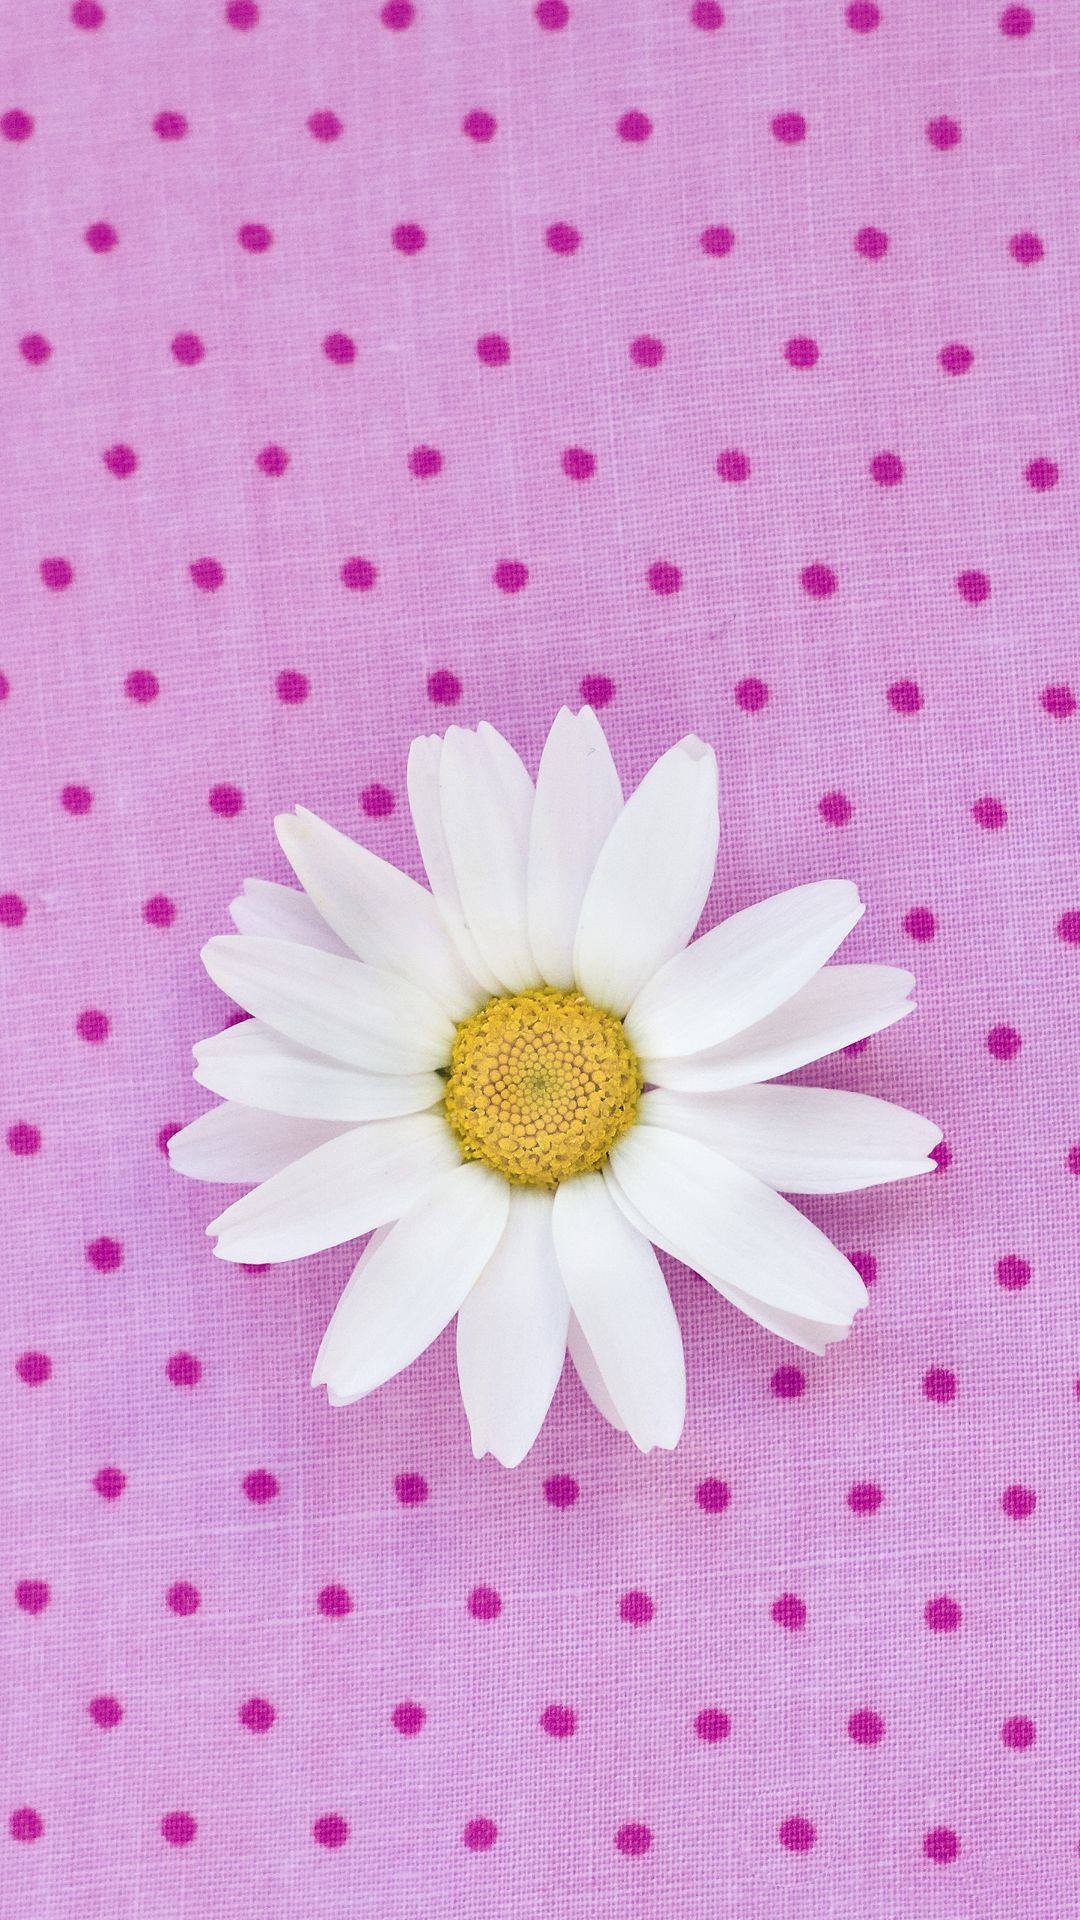 Cute White Daisy Iphone Wallpaper